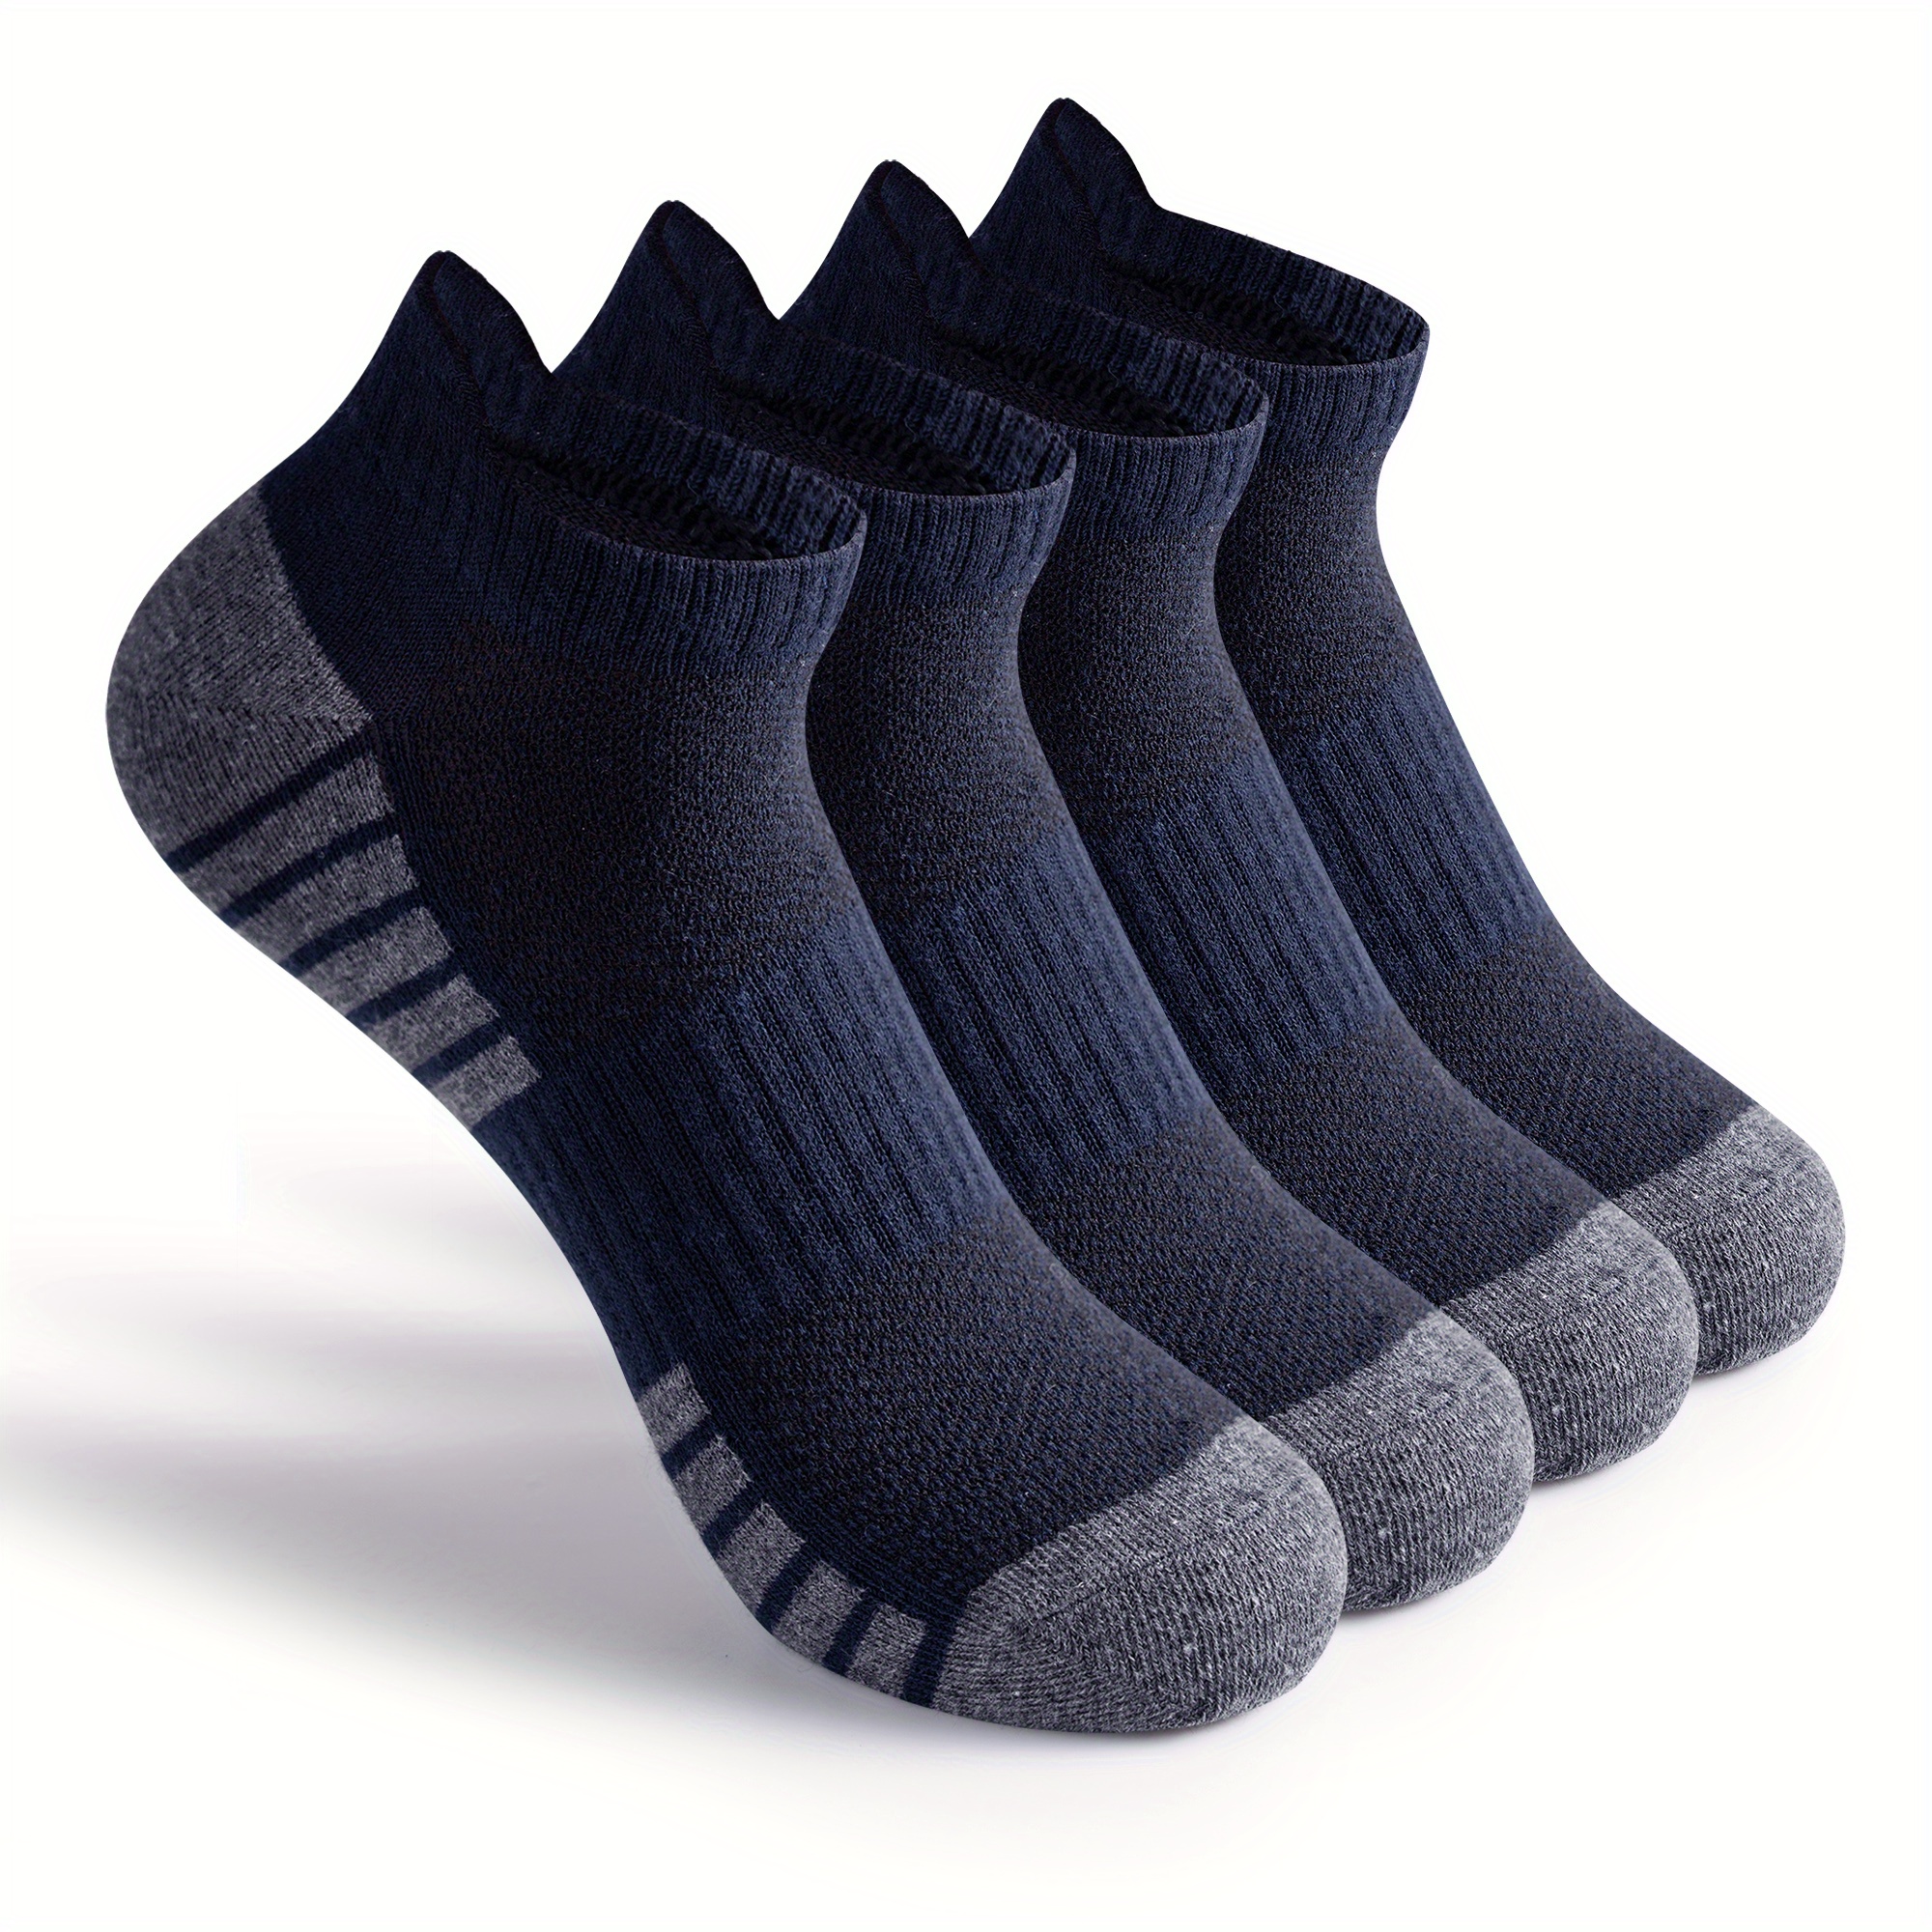 Socks breathable antisliped invisible - Men - 1731449882